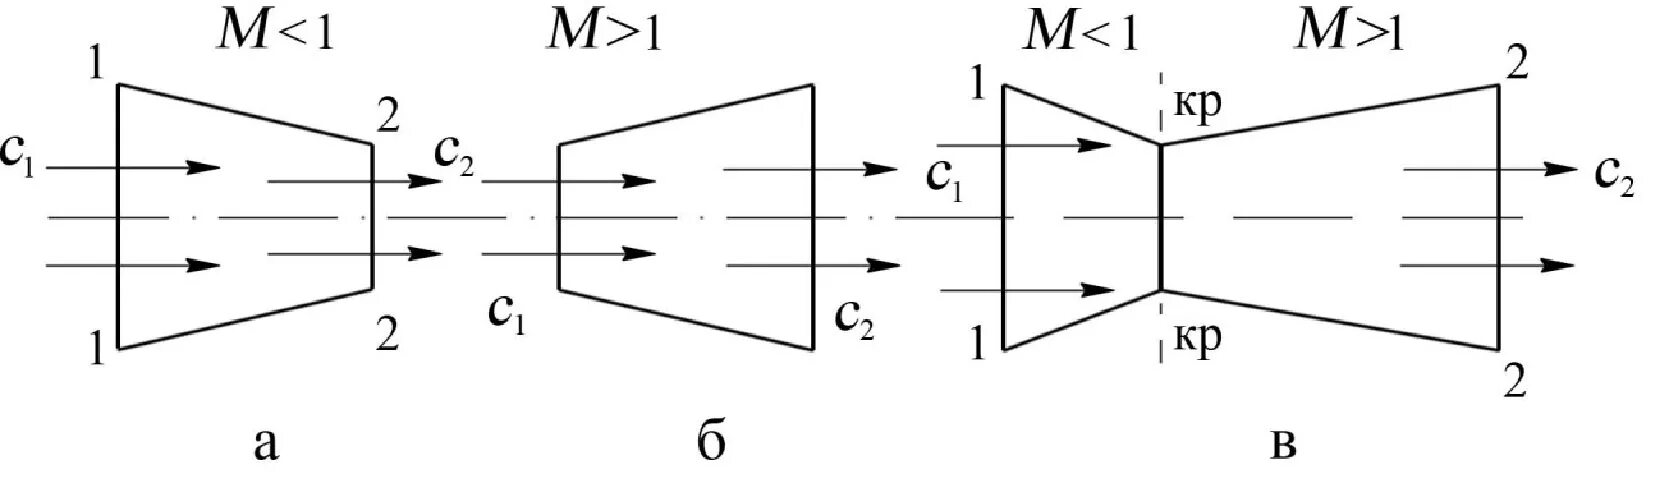 Form channel. Уравнение профиля струи для энергоизолированного потока. Уравнение профиля канала. Разгон и торможение газового потока. Уравнение профиля струи (m - 1).